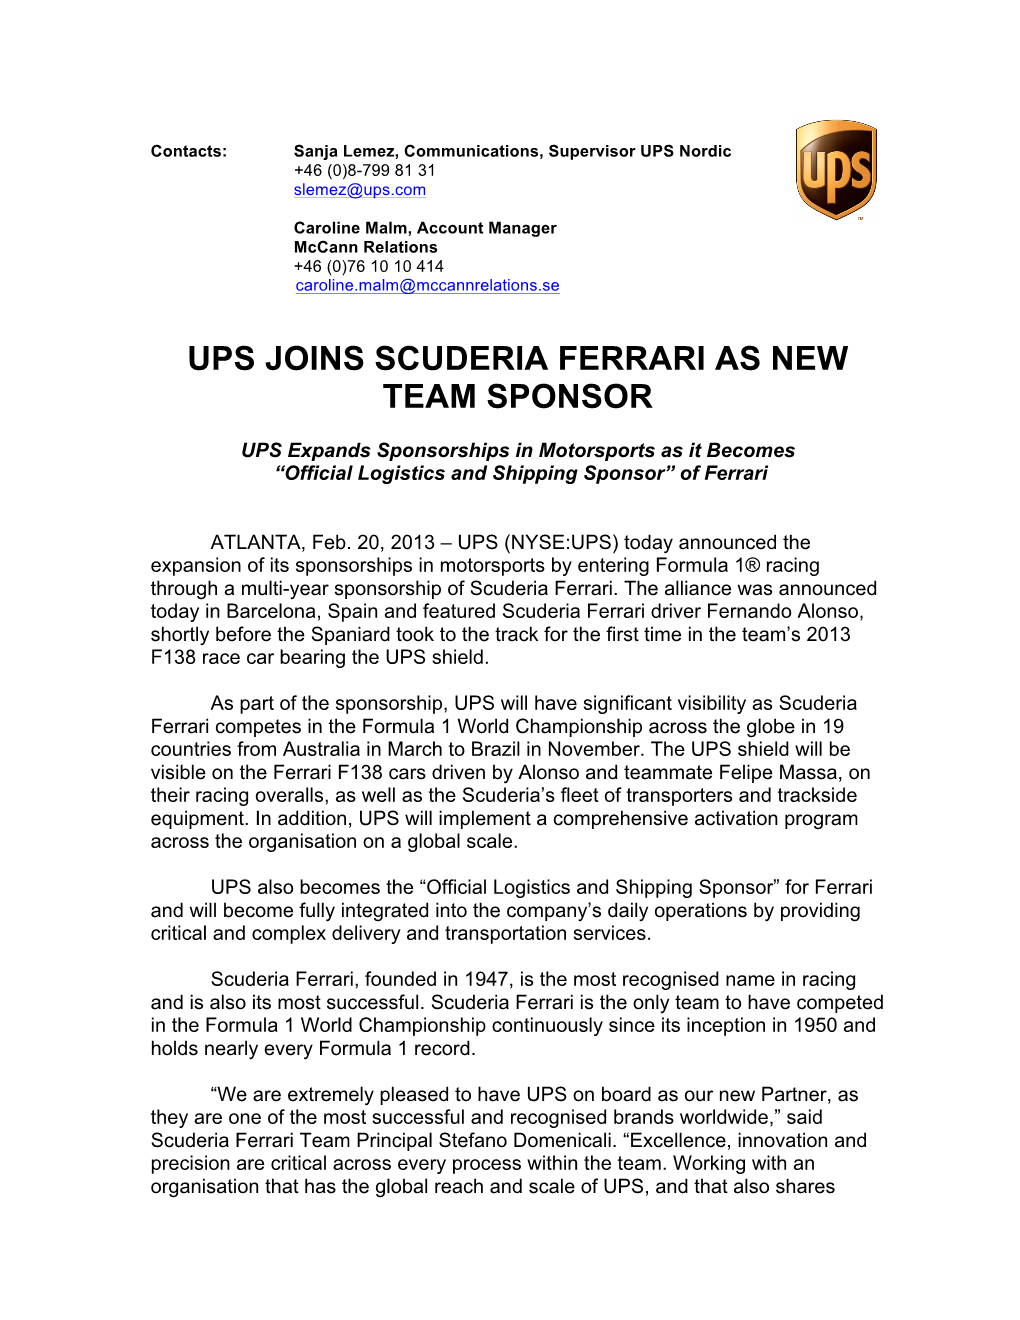 Ups Joins Scuderia Ferrari As New Team Sponsor